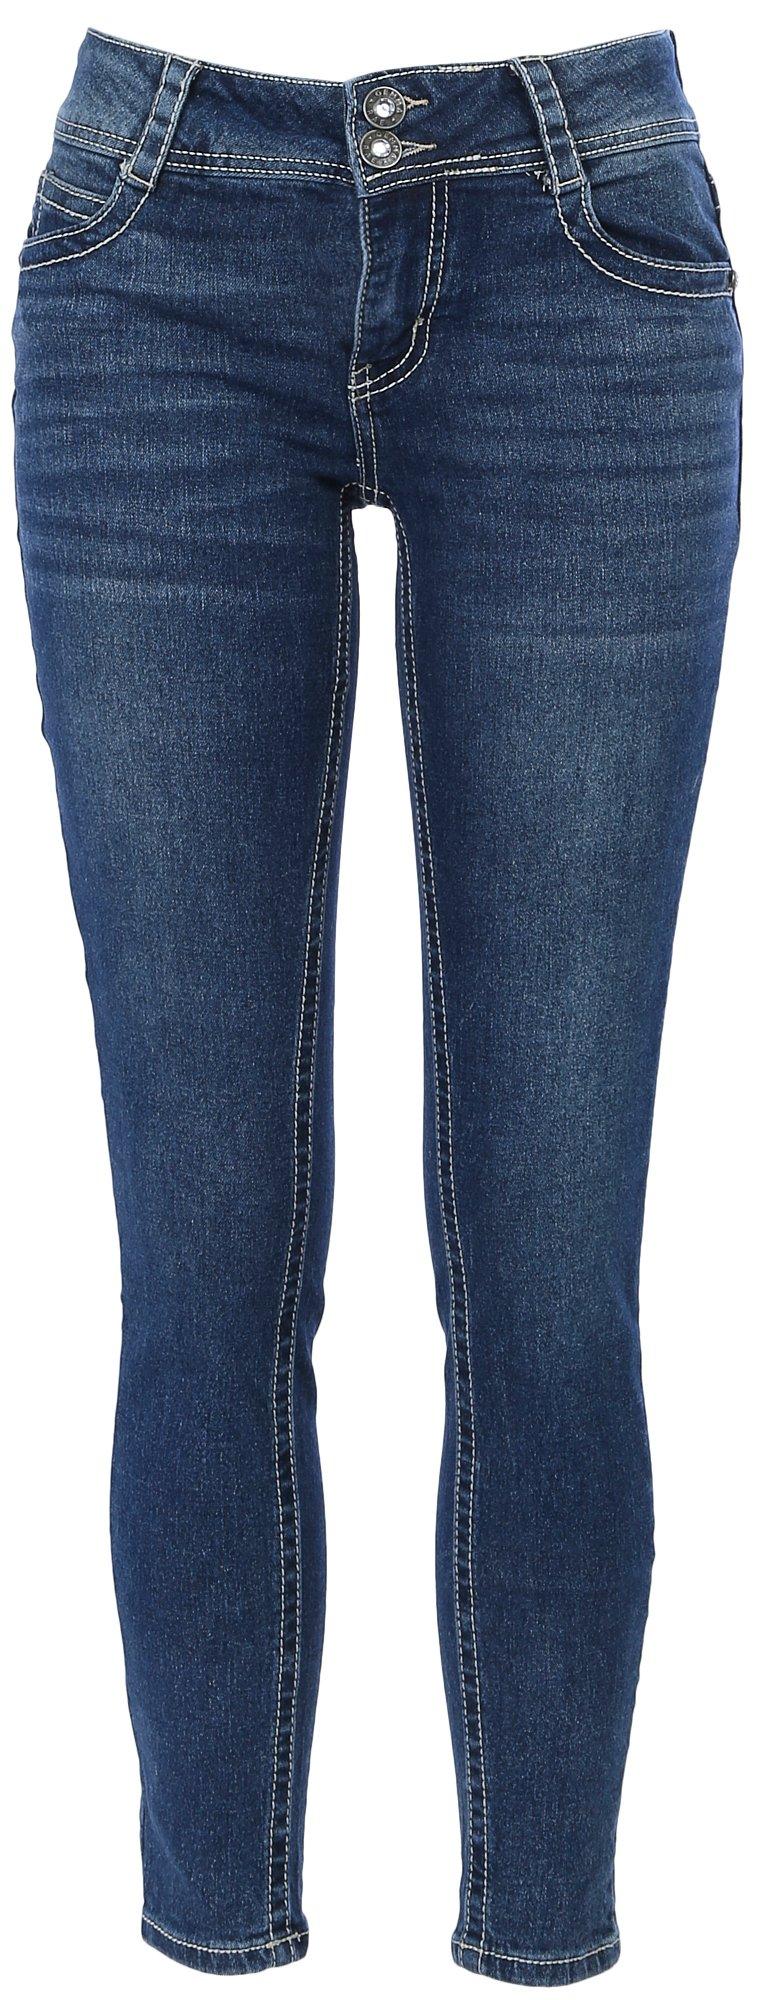 Gemma Rae Juniors Curvy Skinny Embellished Jeans